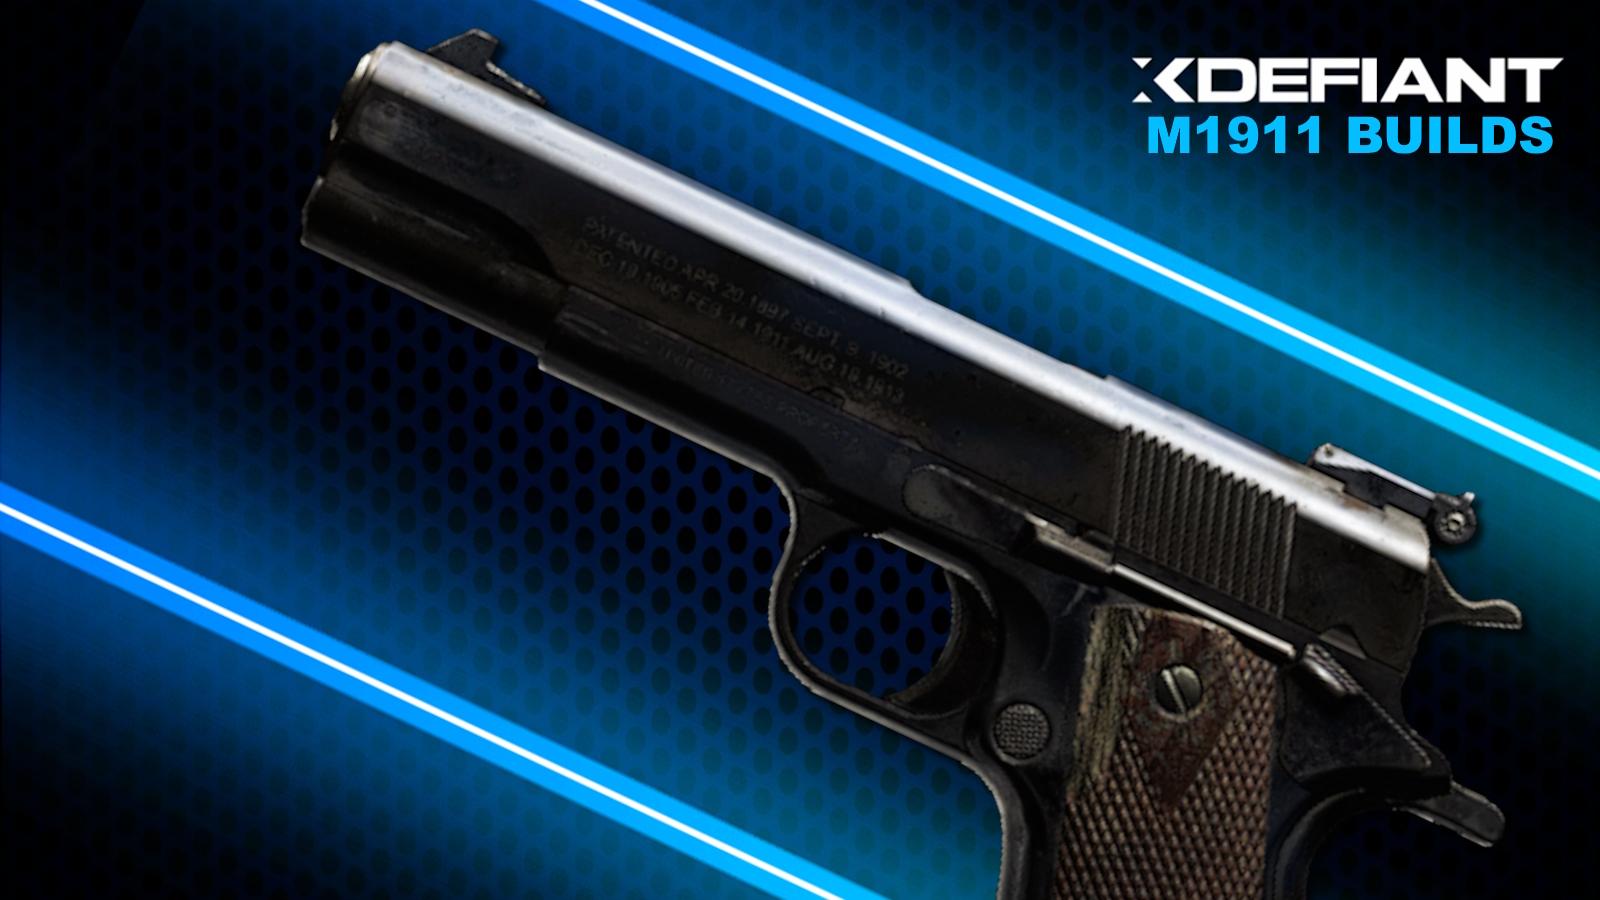 M1911 pistol in XDefiant